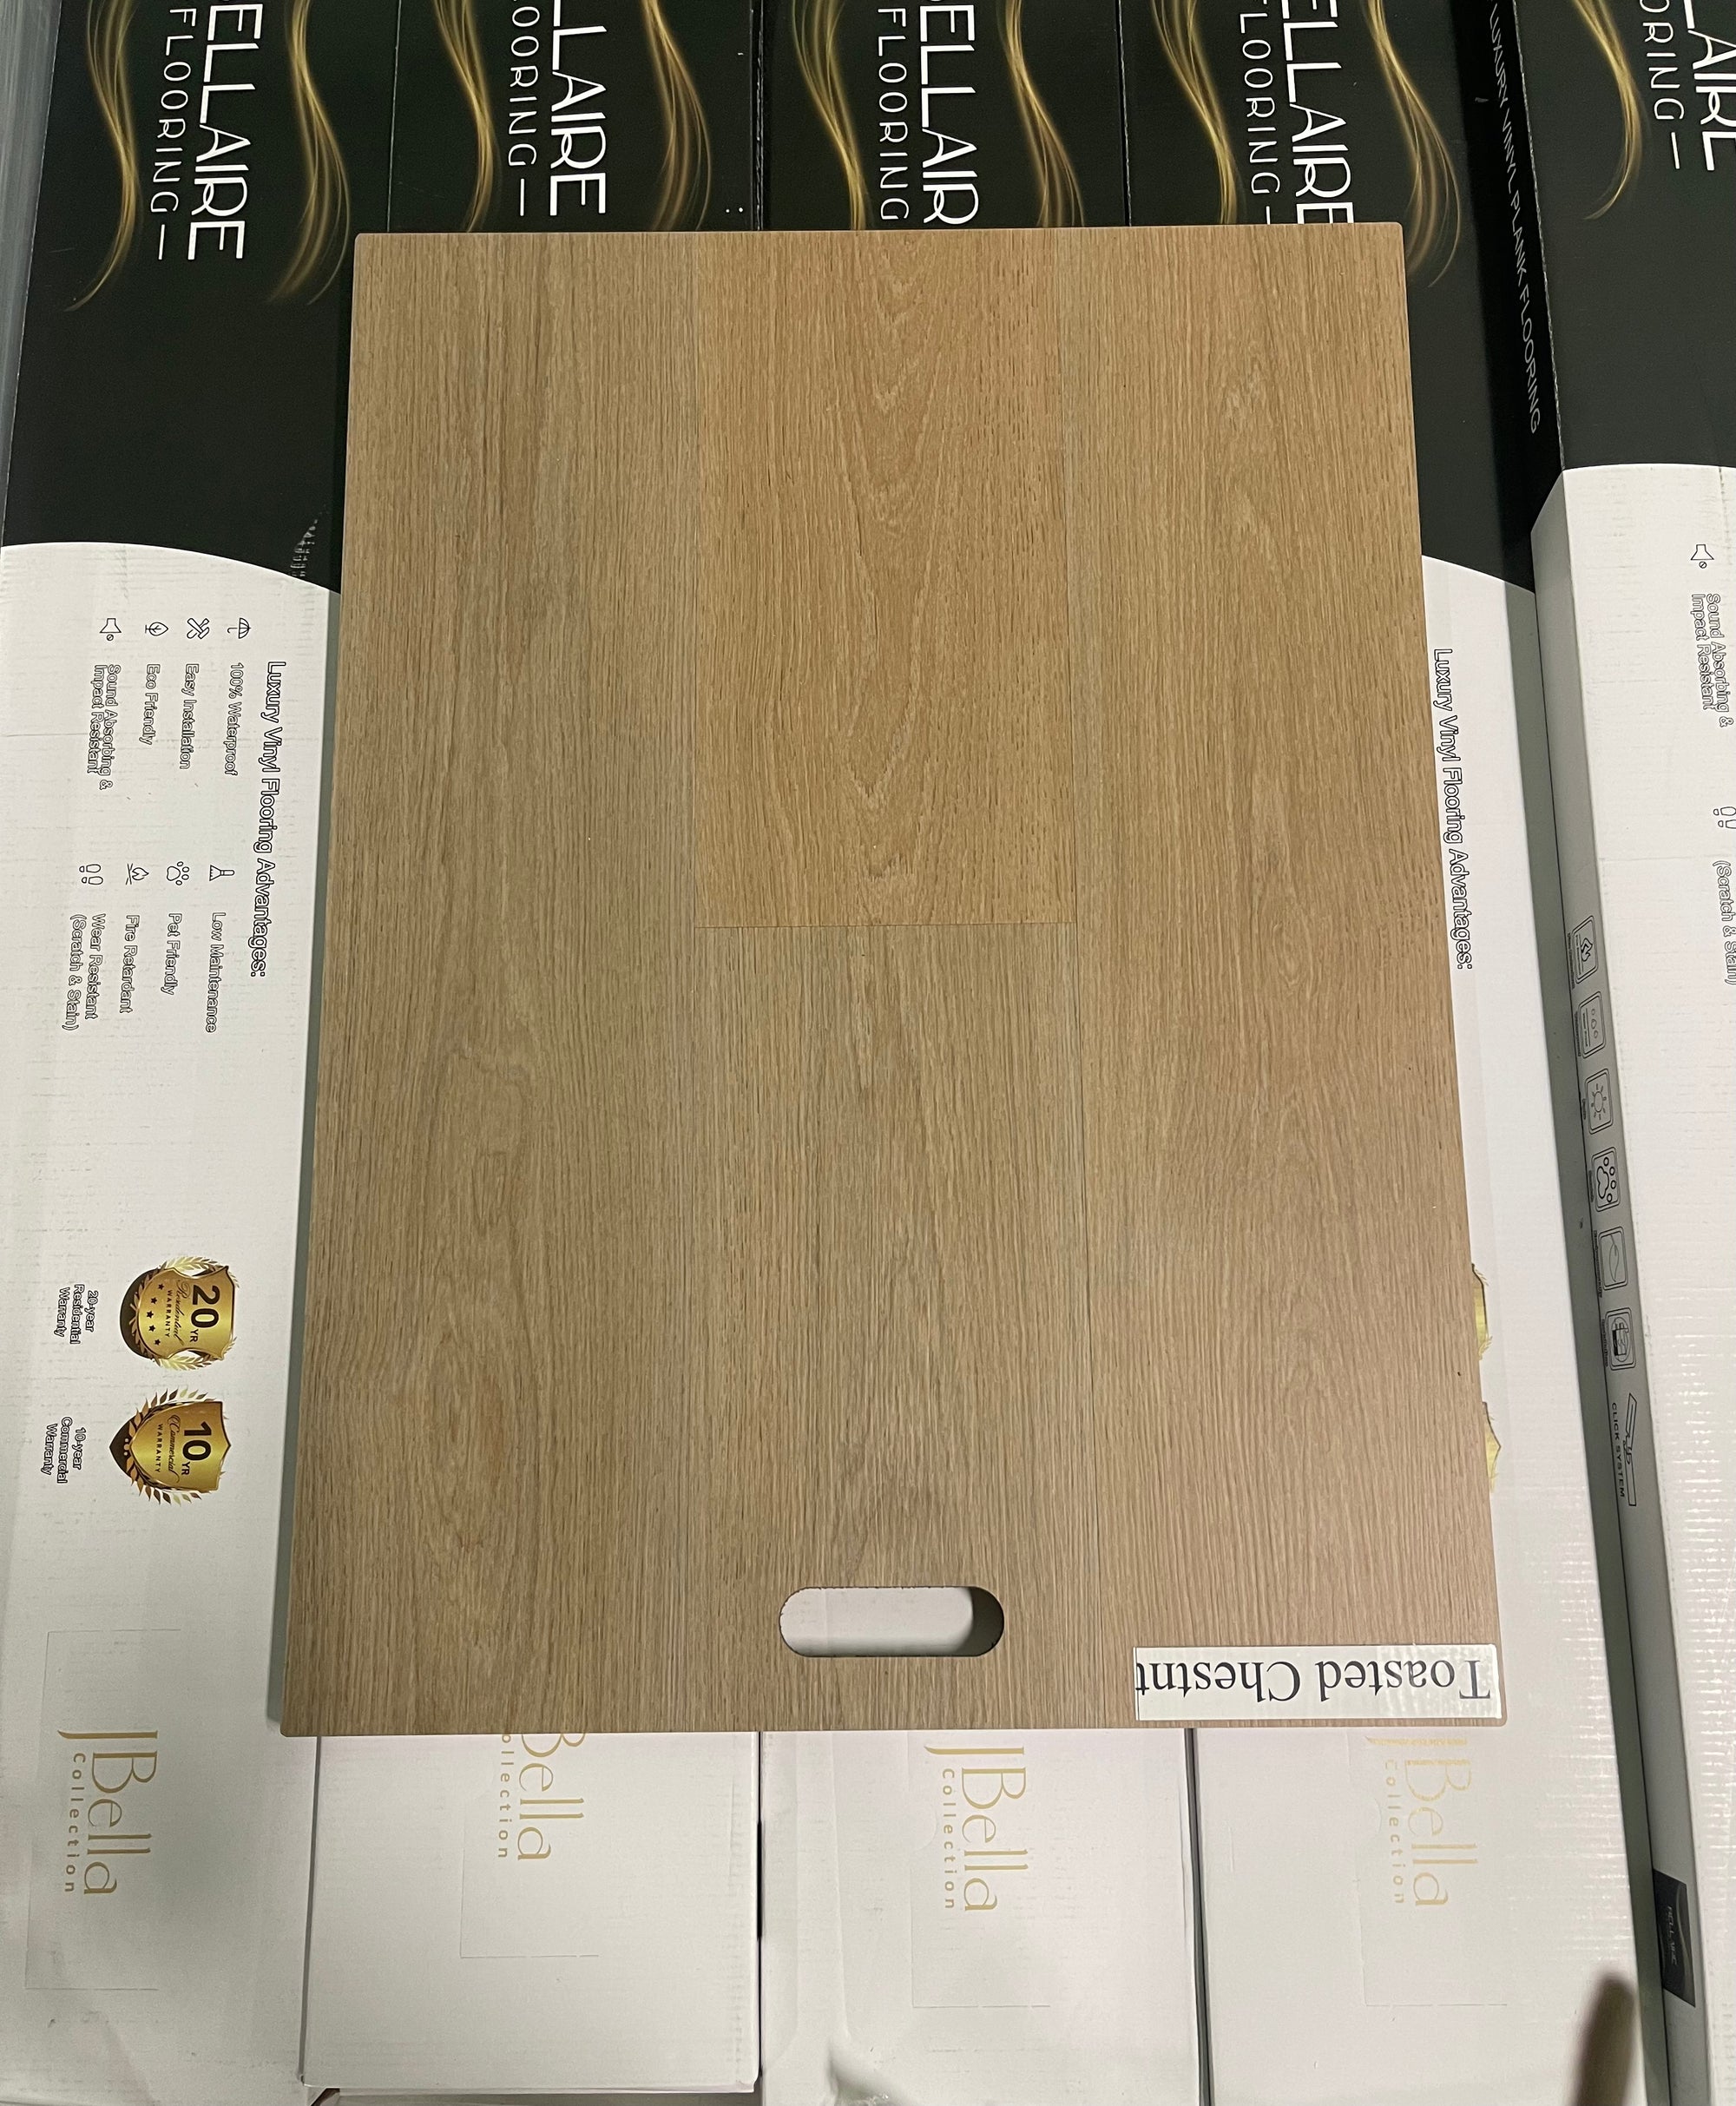 Bellaire 12 mil Luxury Vinyl Plank Flooring - Toasted Chestnut $1.99/sqft